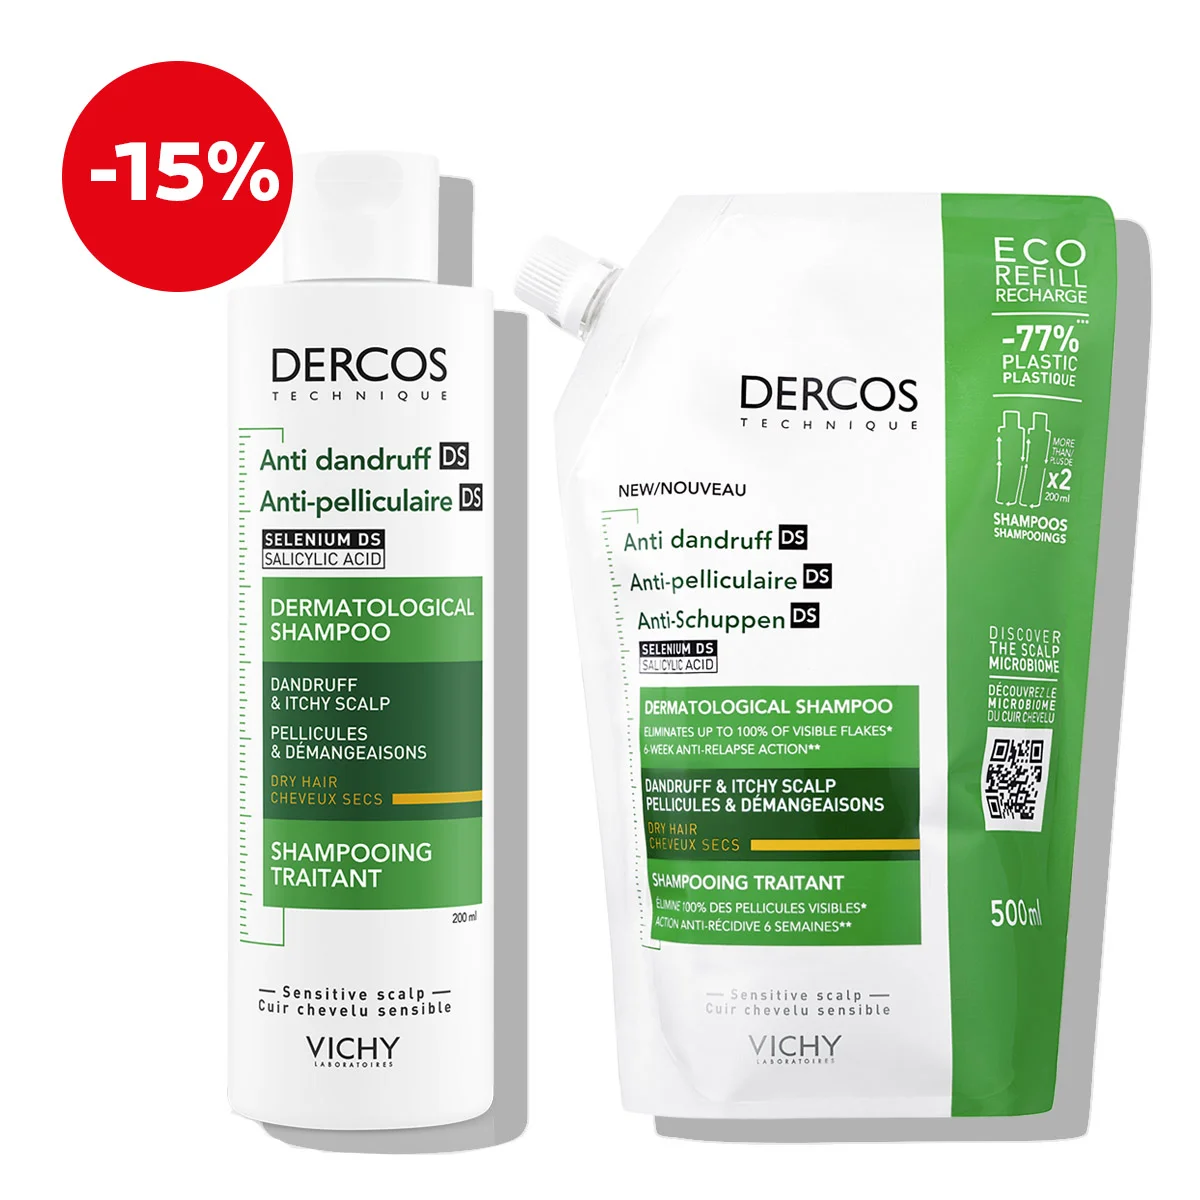 Vichy DERCOS Anti-Dandruff Shampoo + eco refill for dry scalp (1)